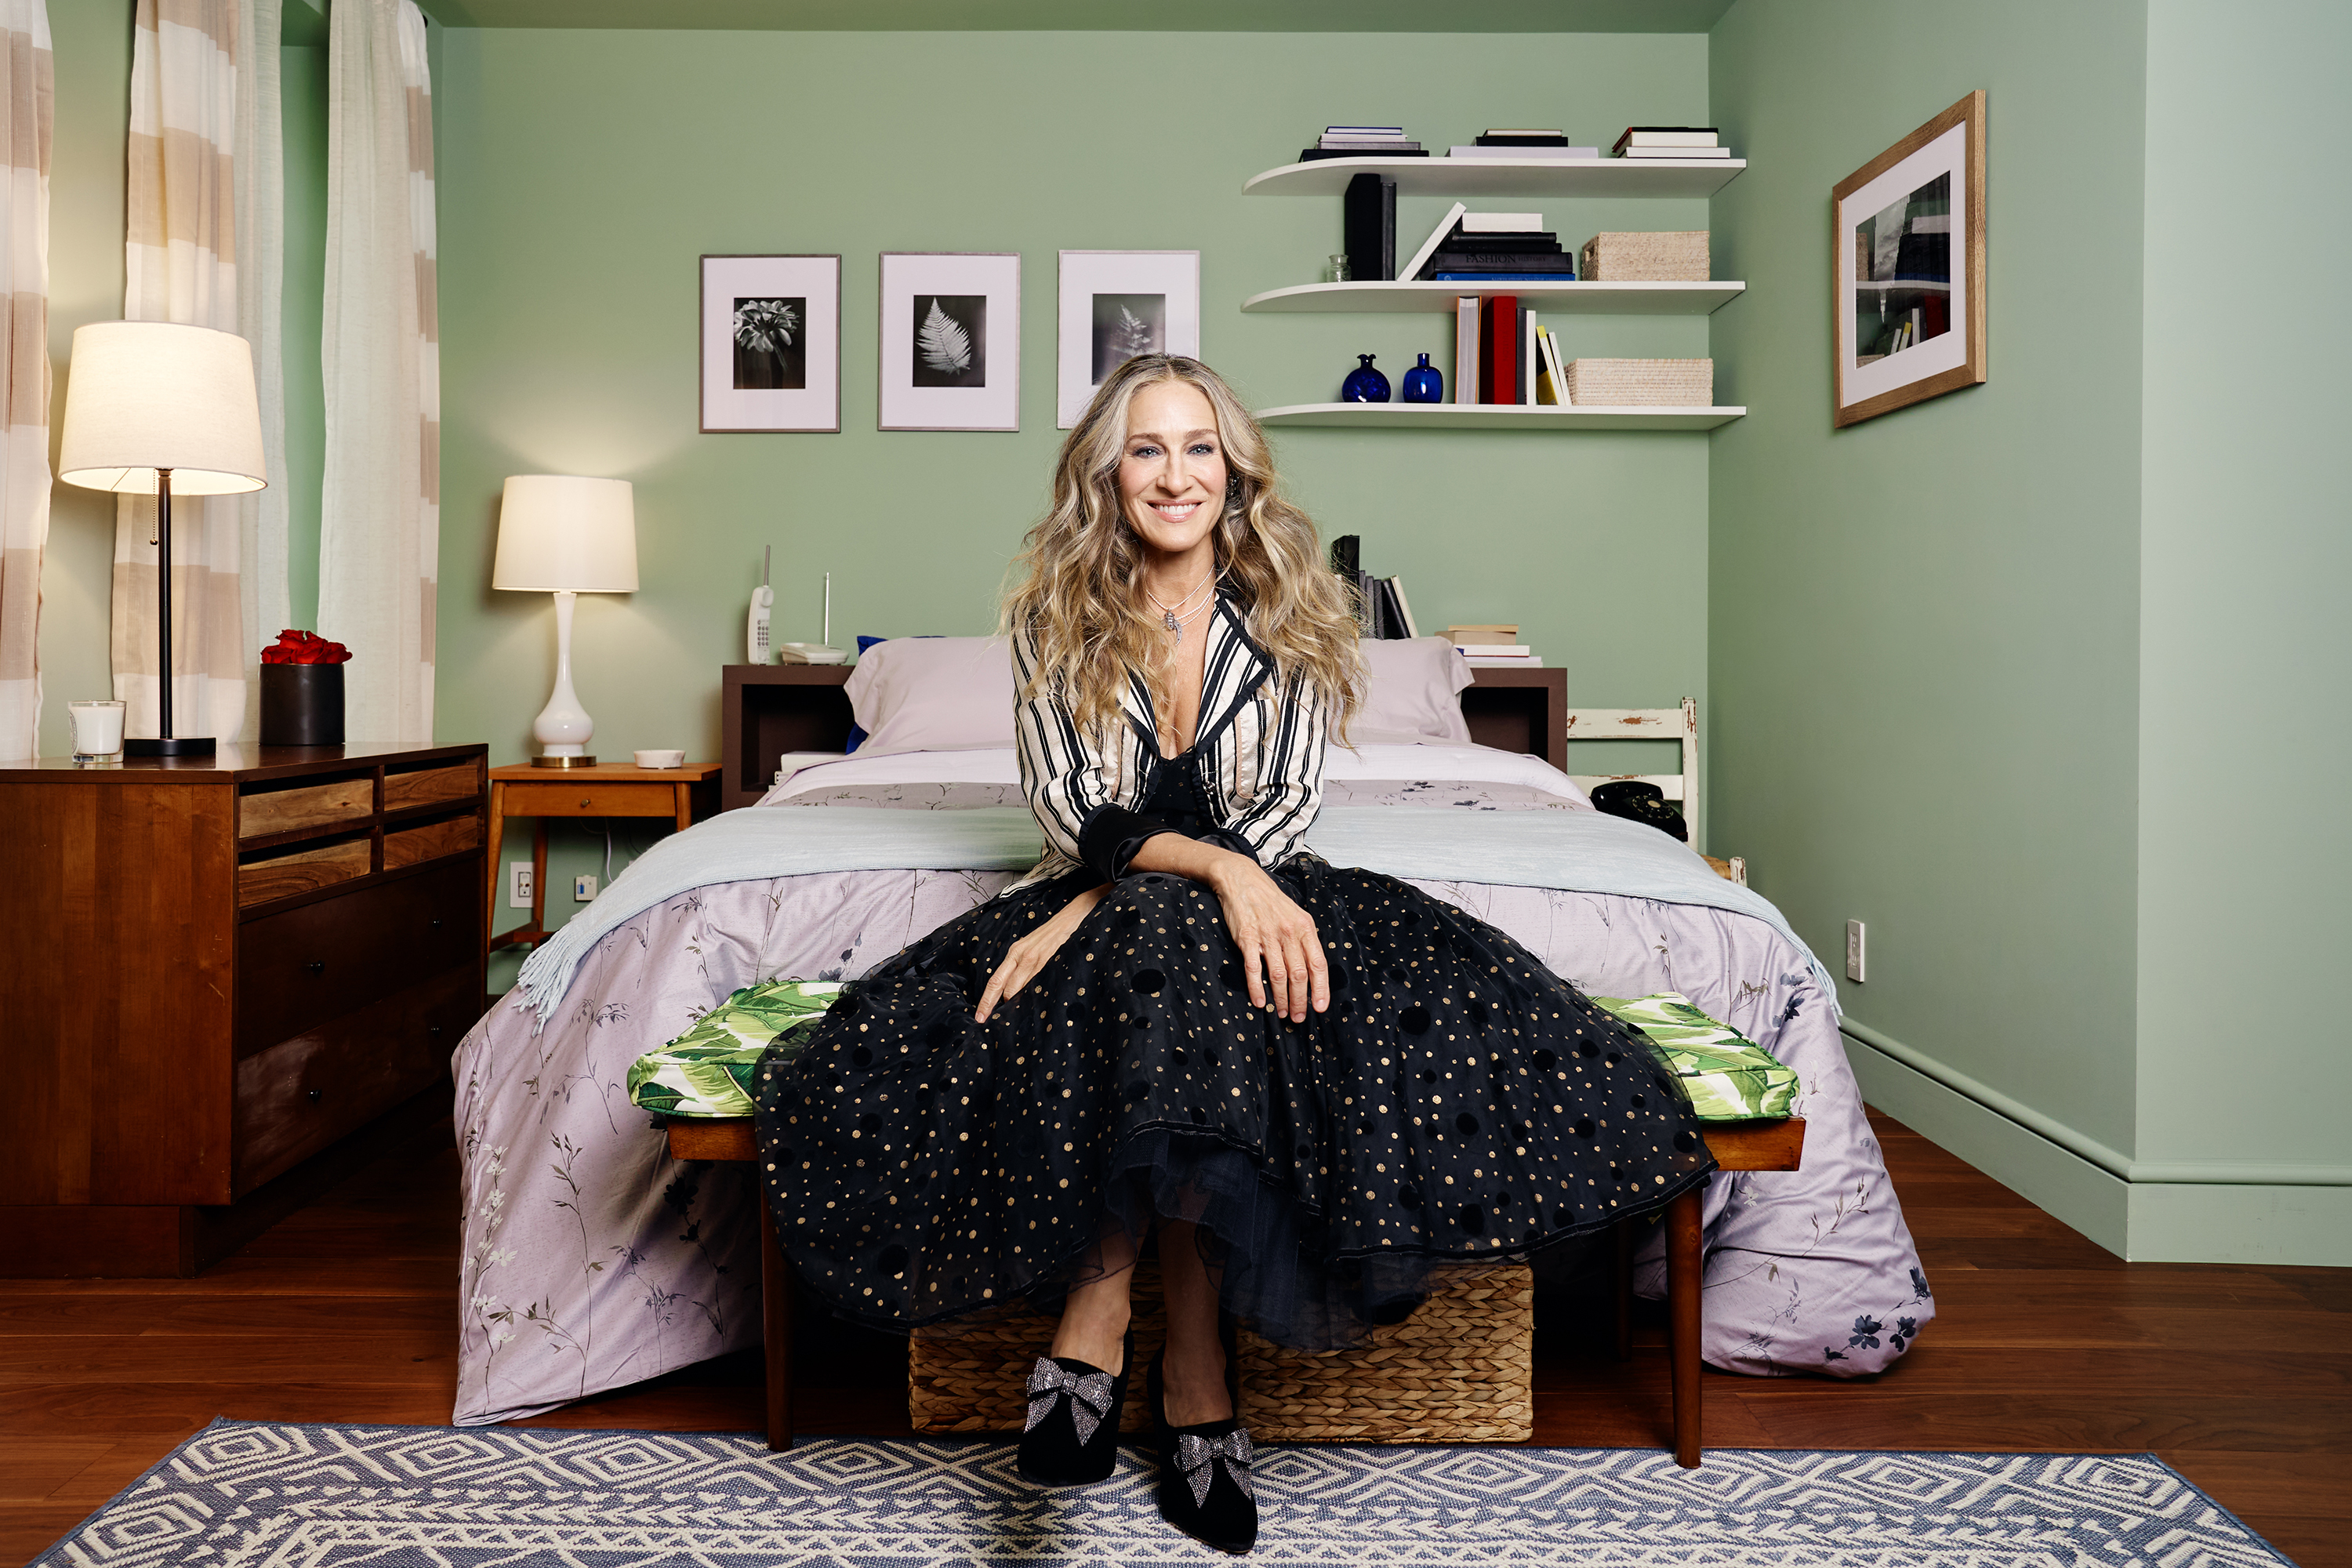 Sarah Jessica Parker hosts Carrie Bradshaw's apartment (and closet